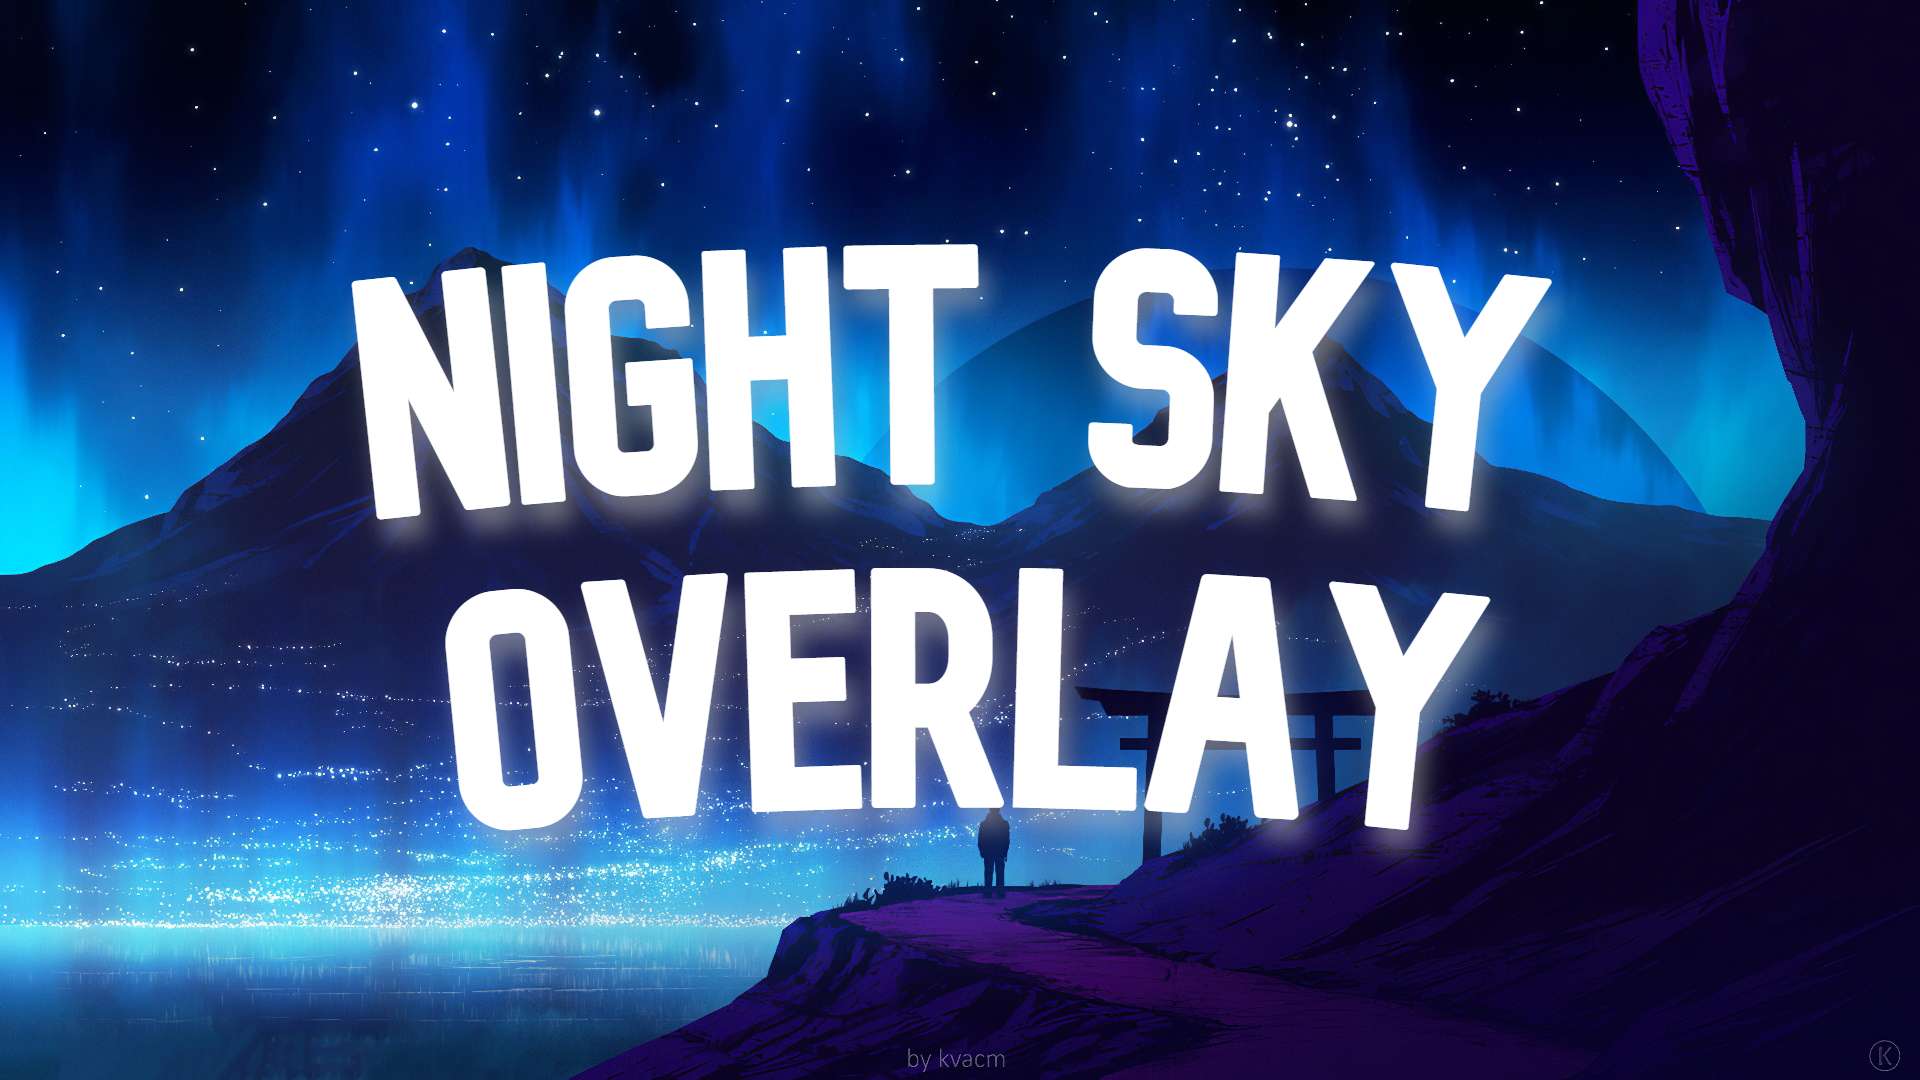 Night Sky Overlay #15 16 by rh56 on PvPRP